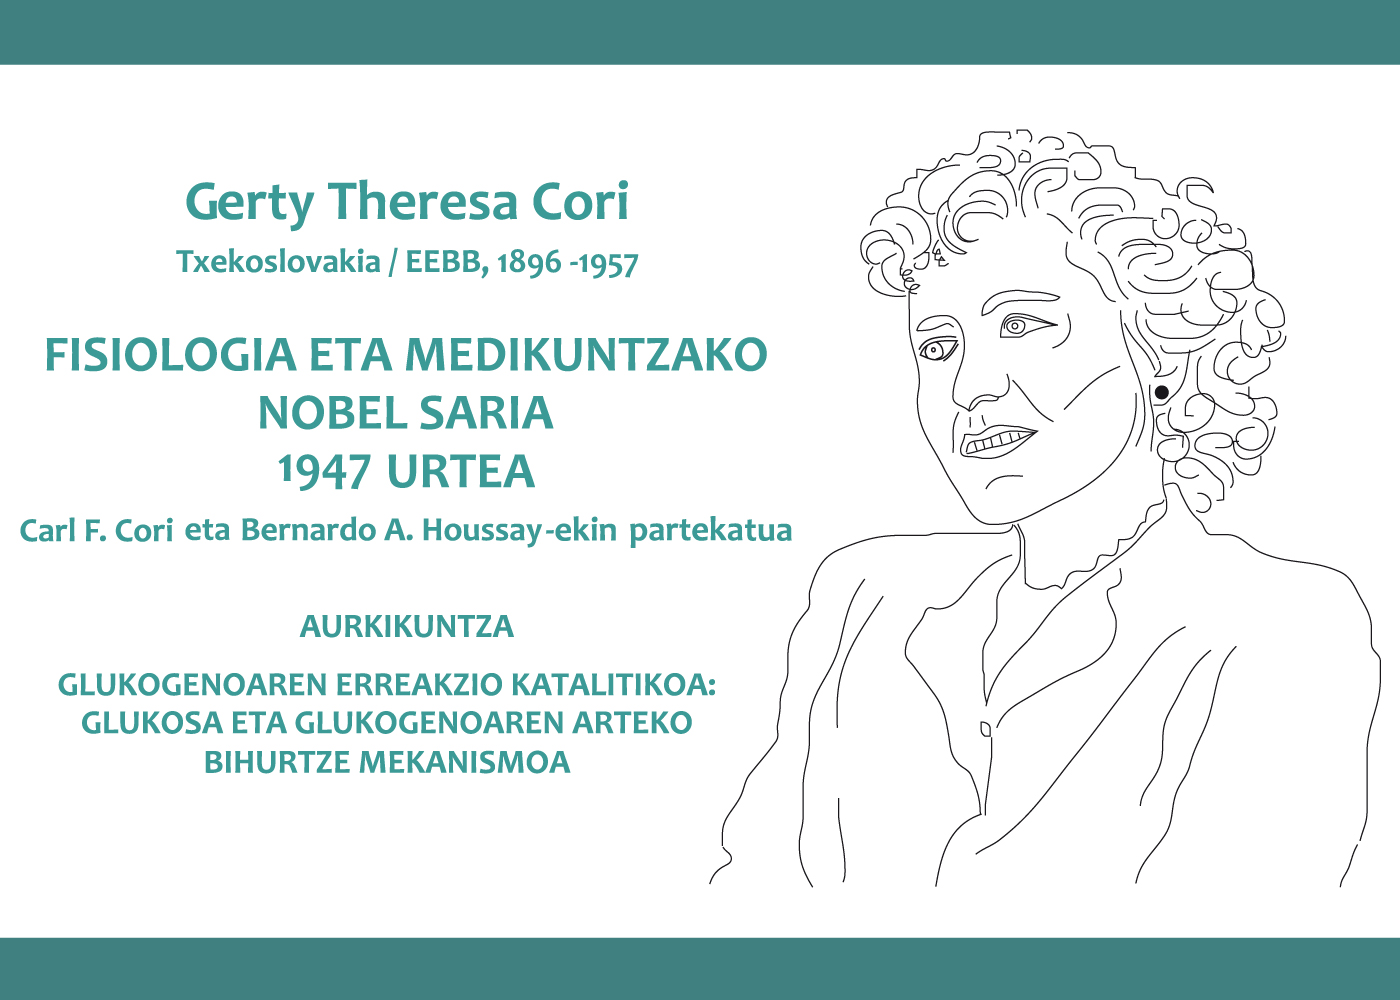 Gertrude Theresa Cori